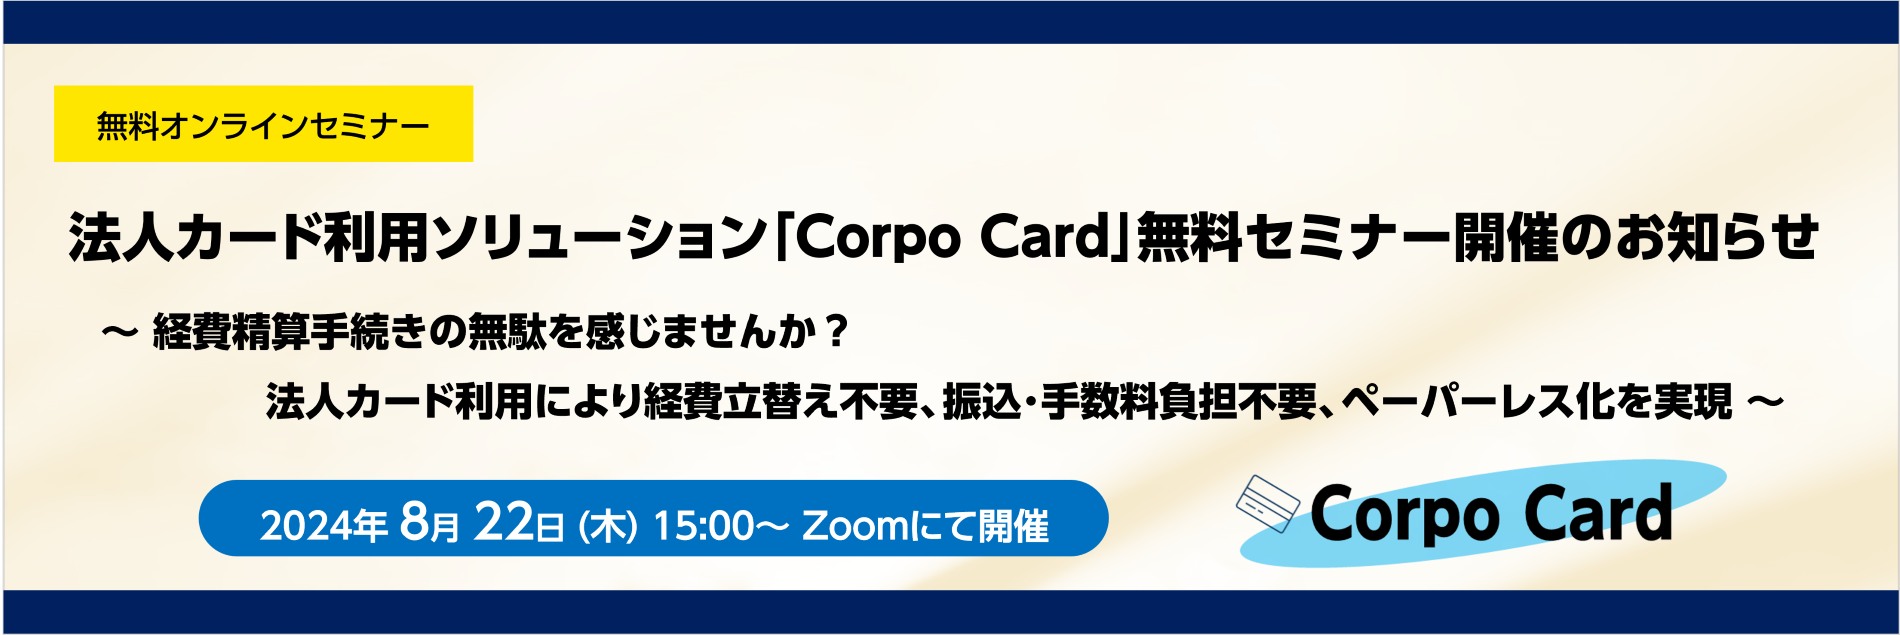 Corpo Card,法人カード利用ソリューション